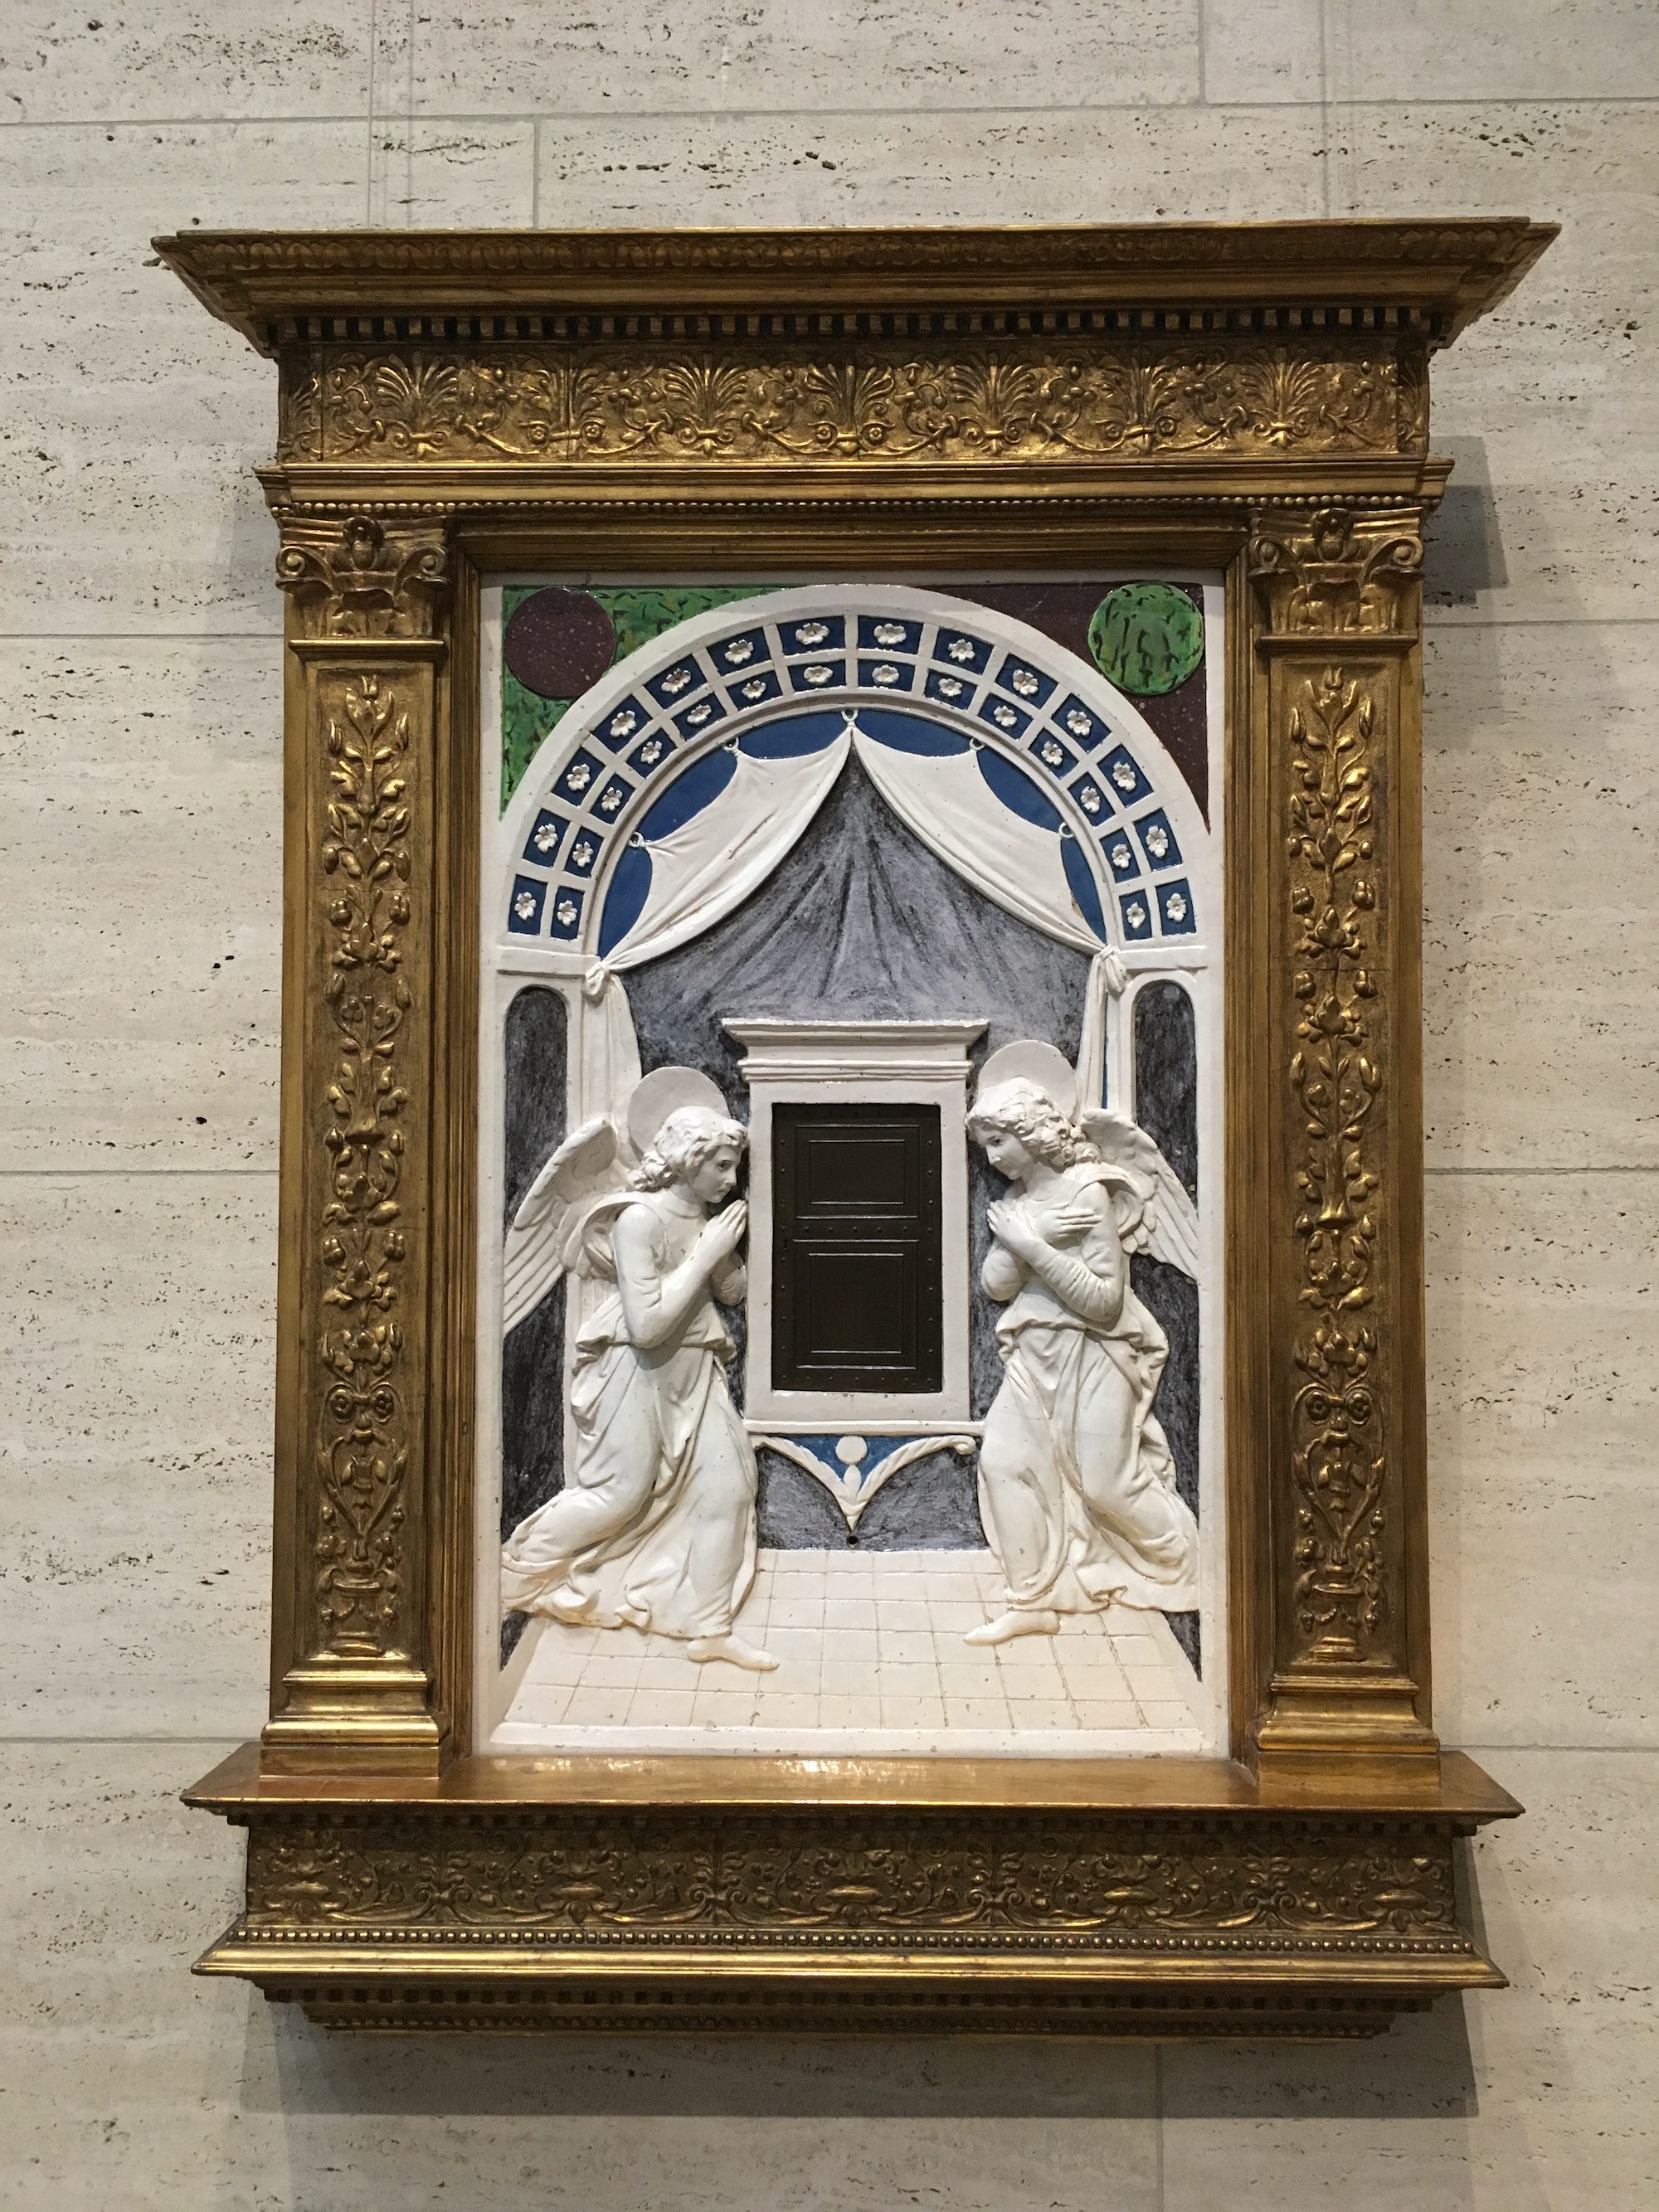 Tabernacle by Andrea della Robbia - c. 1470 - 76.2 cm Isabella Stewart Gardner Museum